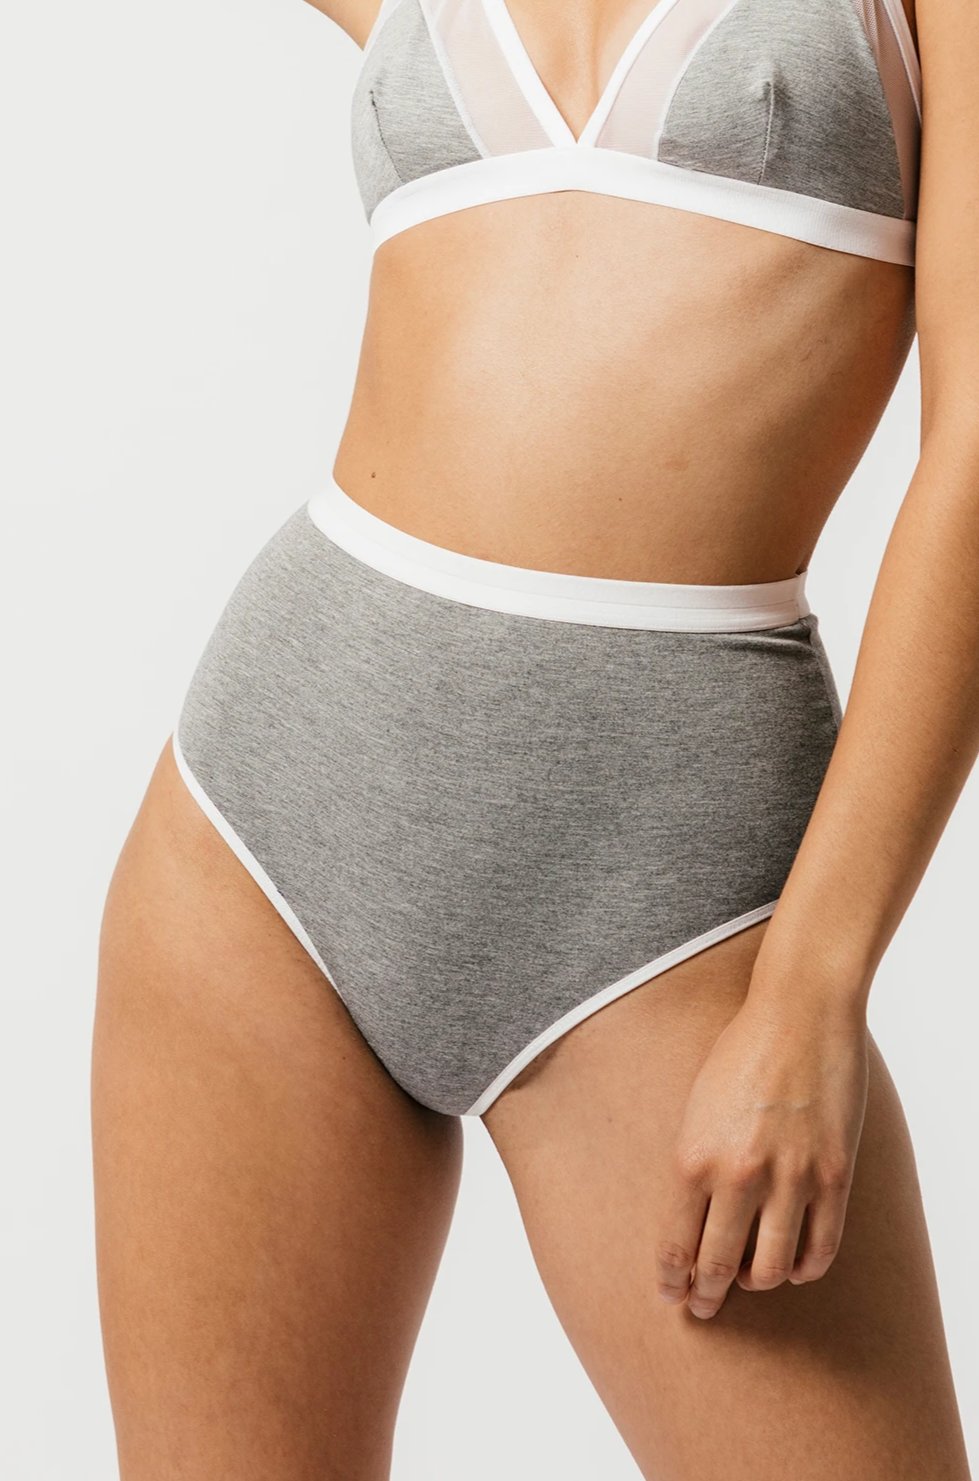 Calvin Klein High-Waisted Panties for Women